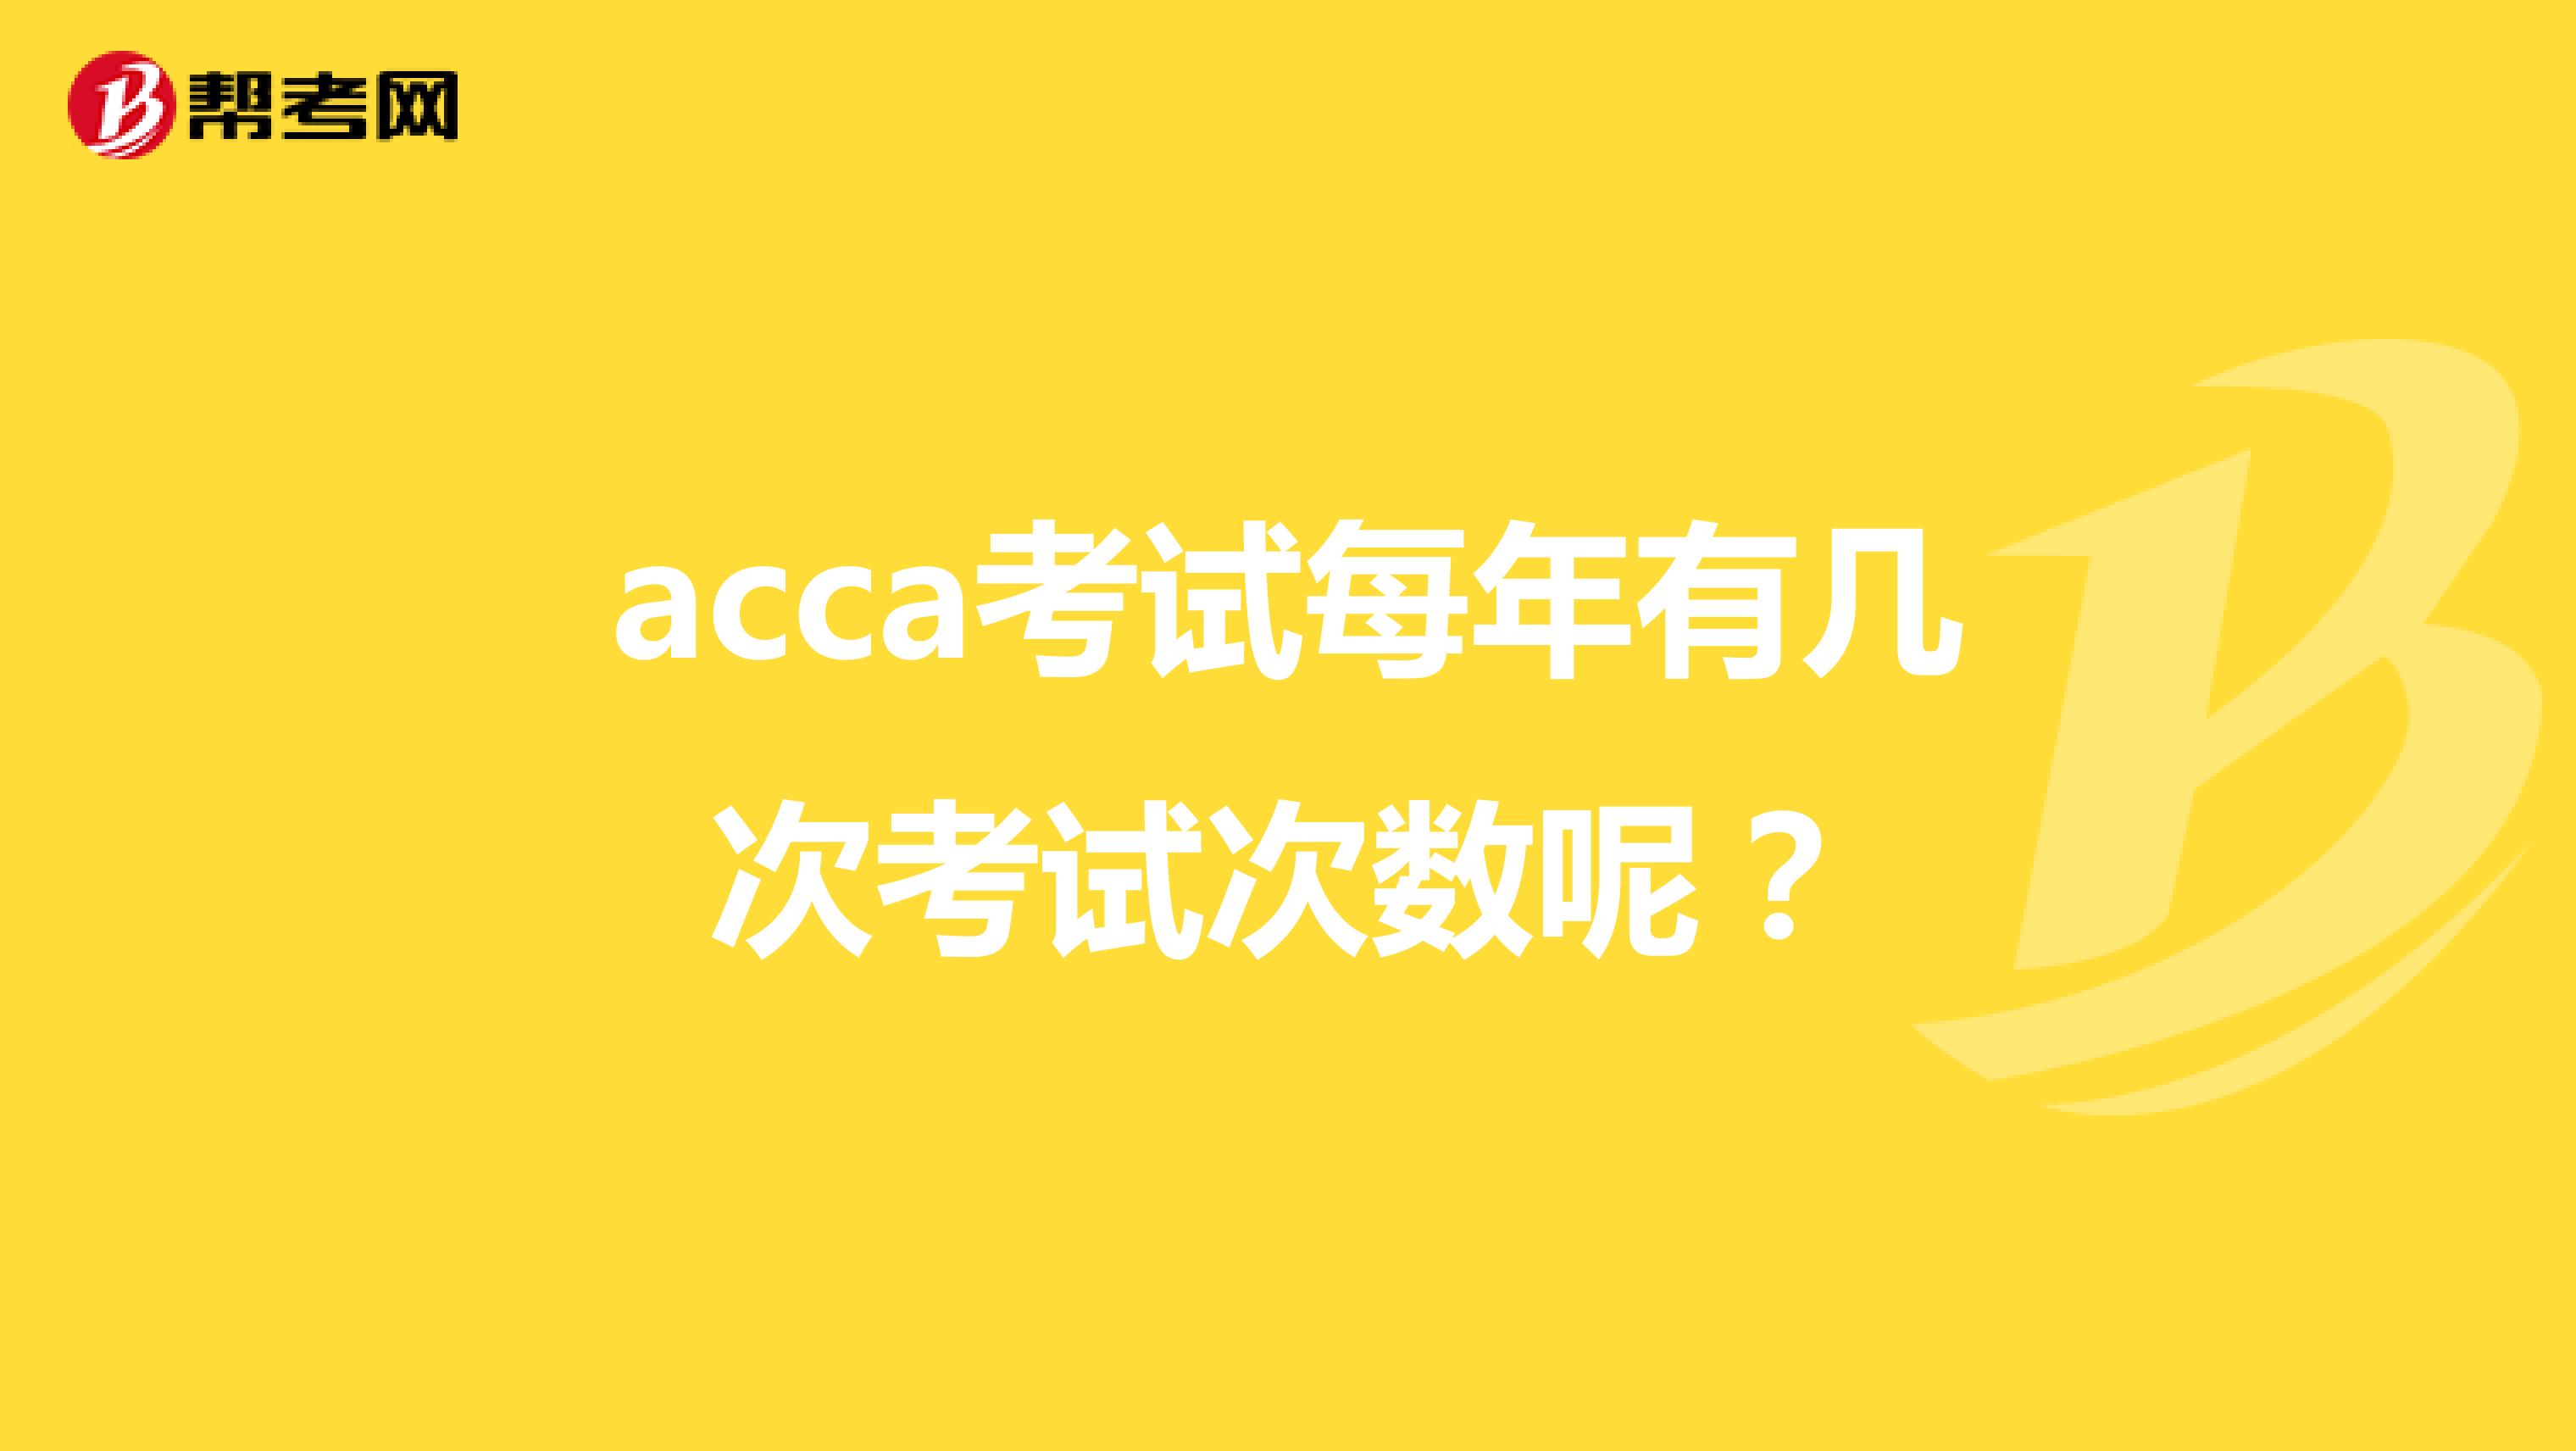 acca考试每年有几次考试次数呢？